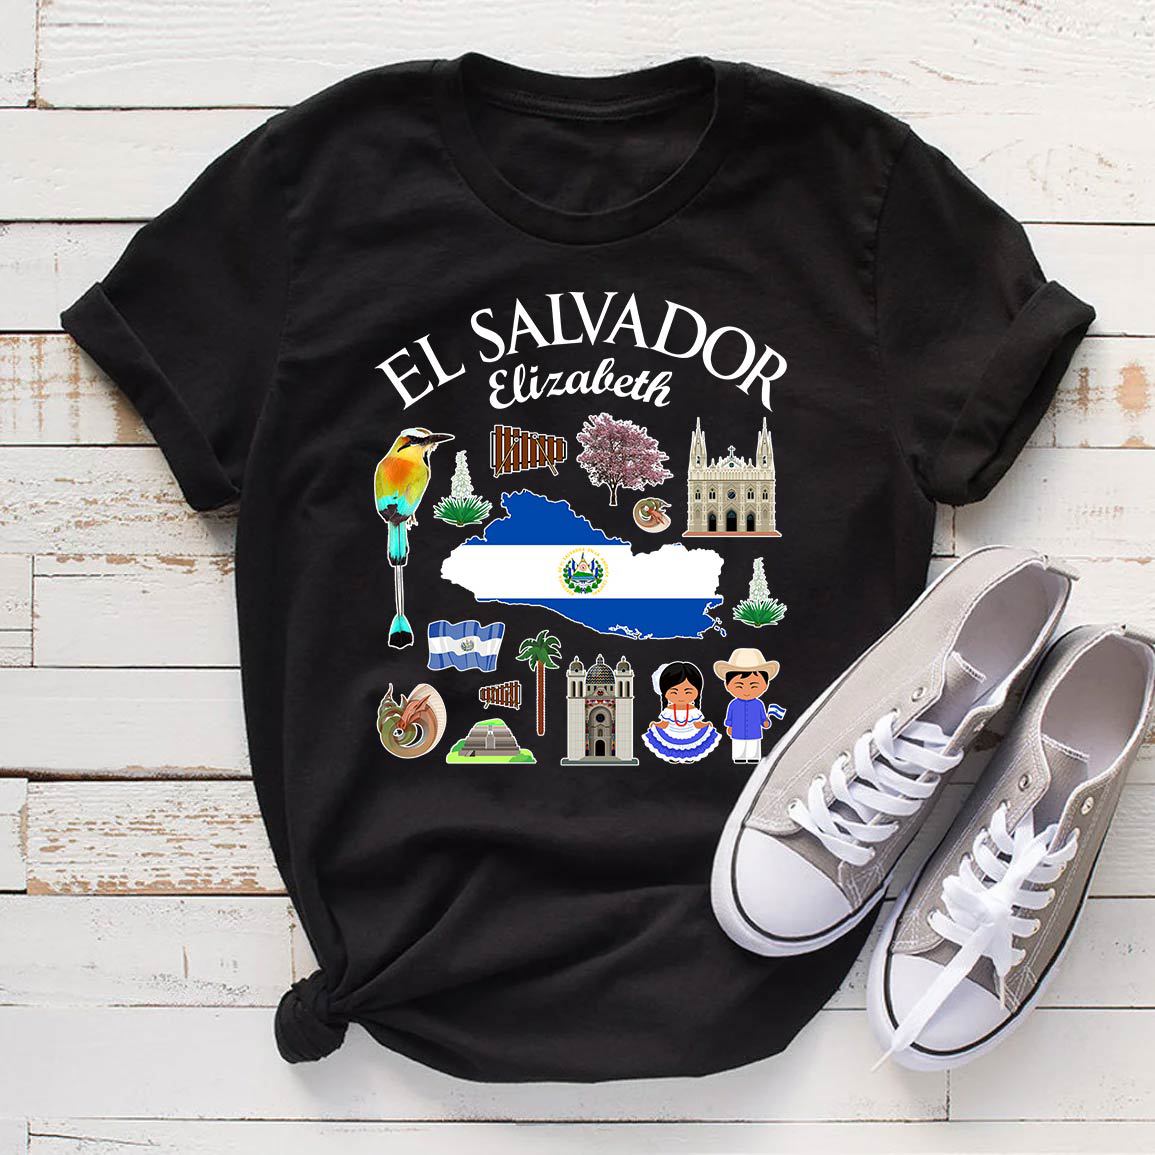 Customized El Salvador T-shirt With Symbols And Name